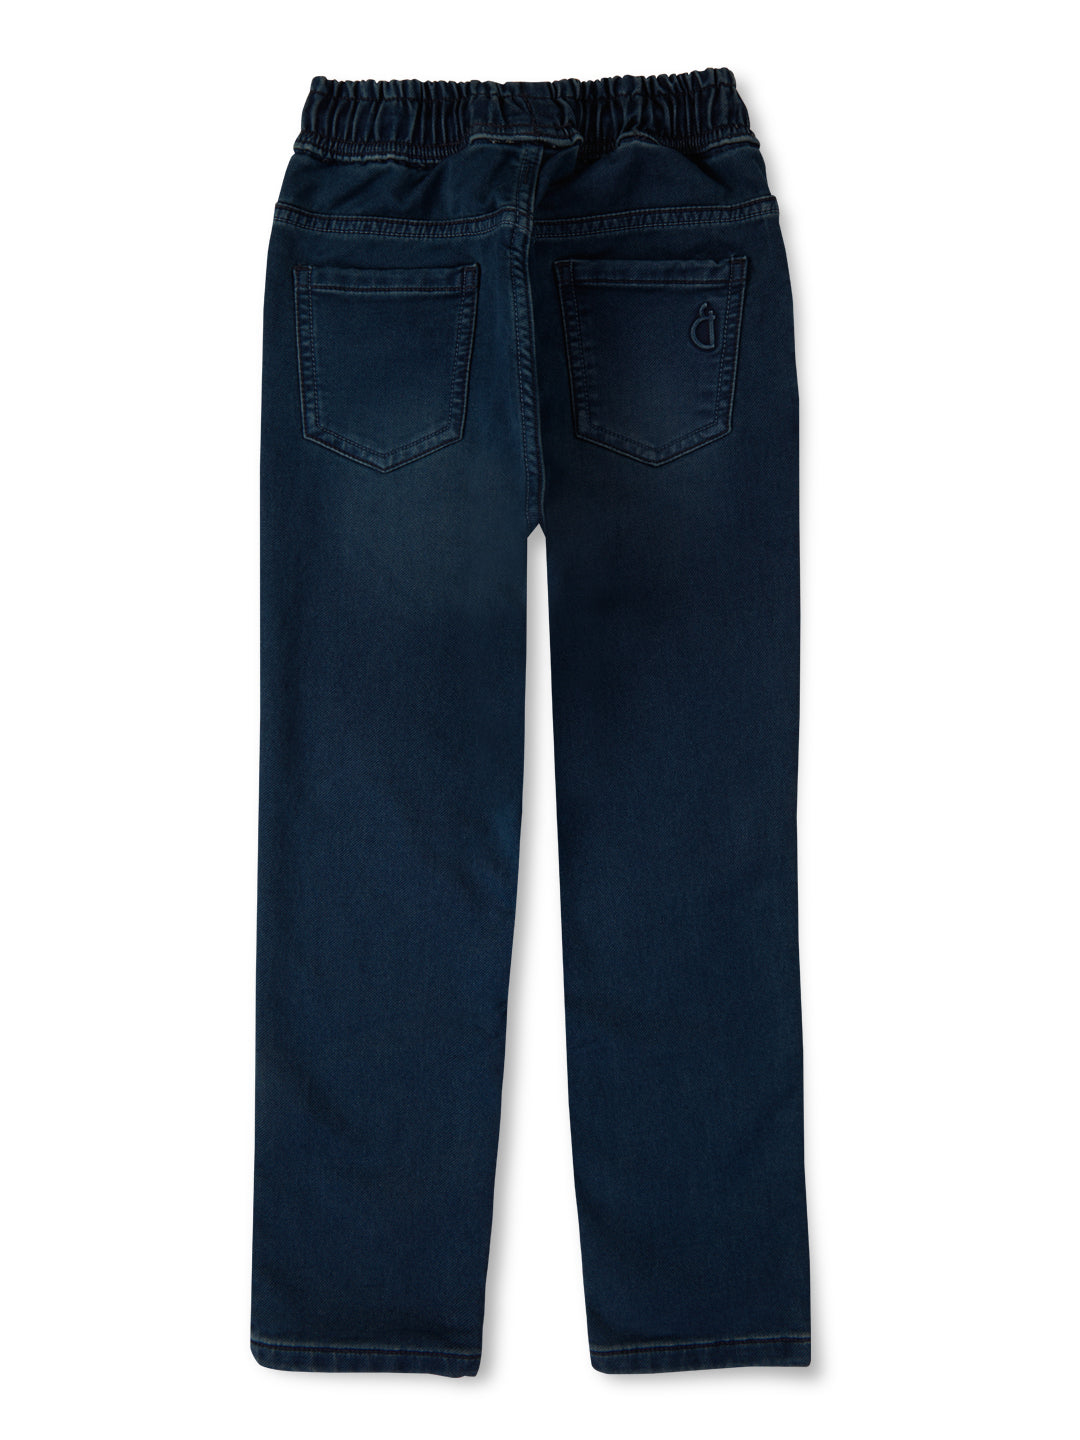 Boys Blue Solid Denim Jeans Elasticated